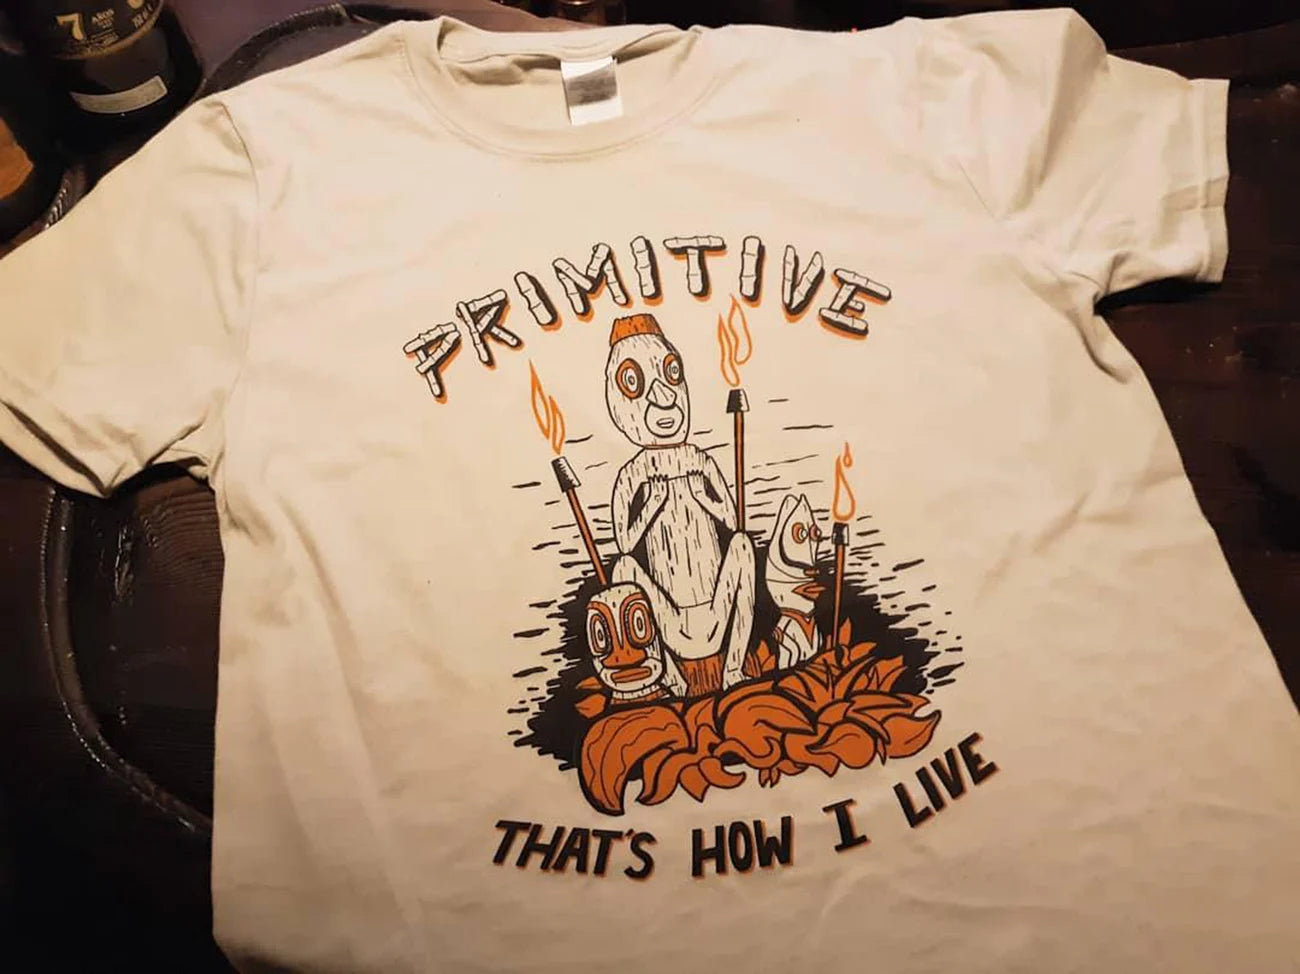 Primitive (That's How I Live) shirt